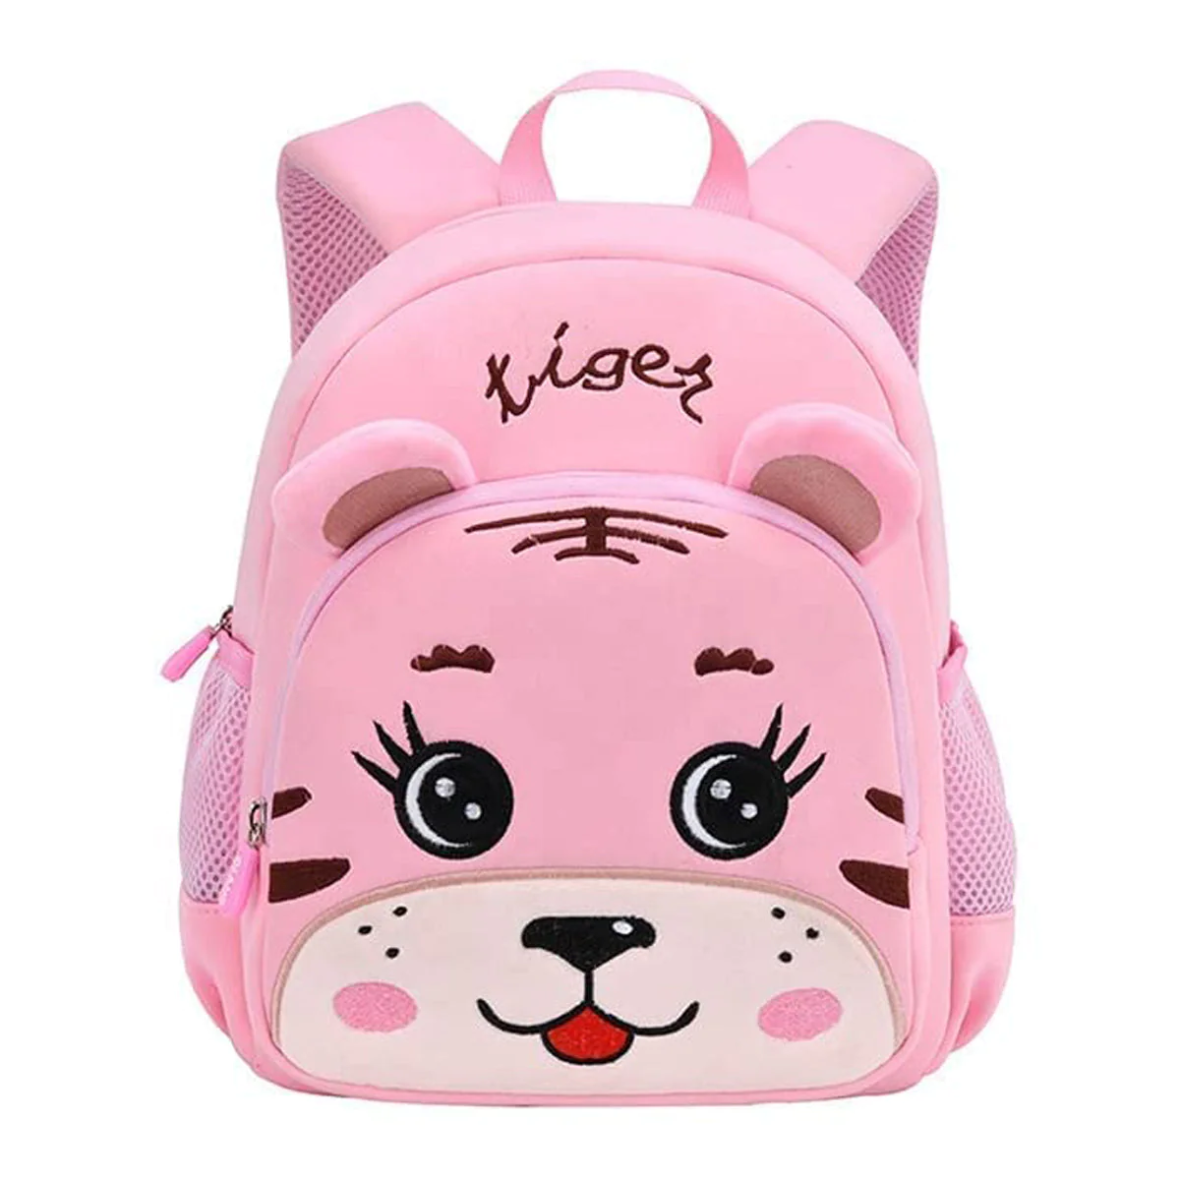 u-smile-cute-tiger-design-bag-for-pre-schoolers-kids-water-resistant-mini-backpack-for-kids-lightweight-small-size-bag-for-play-school-nursery-kids-picnic-bag-travel 3